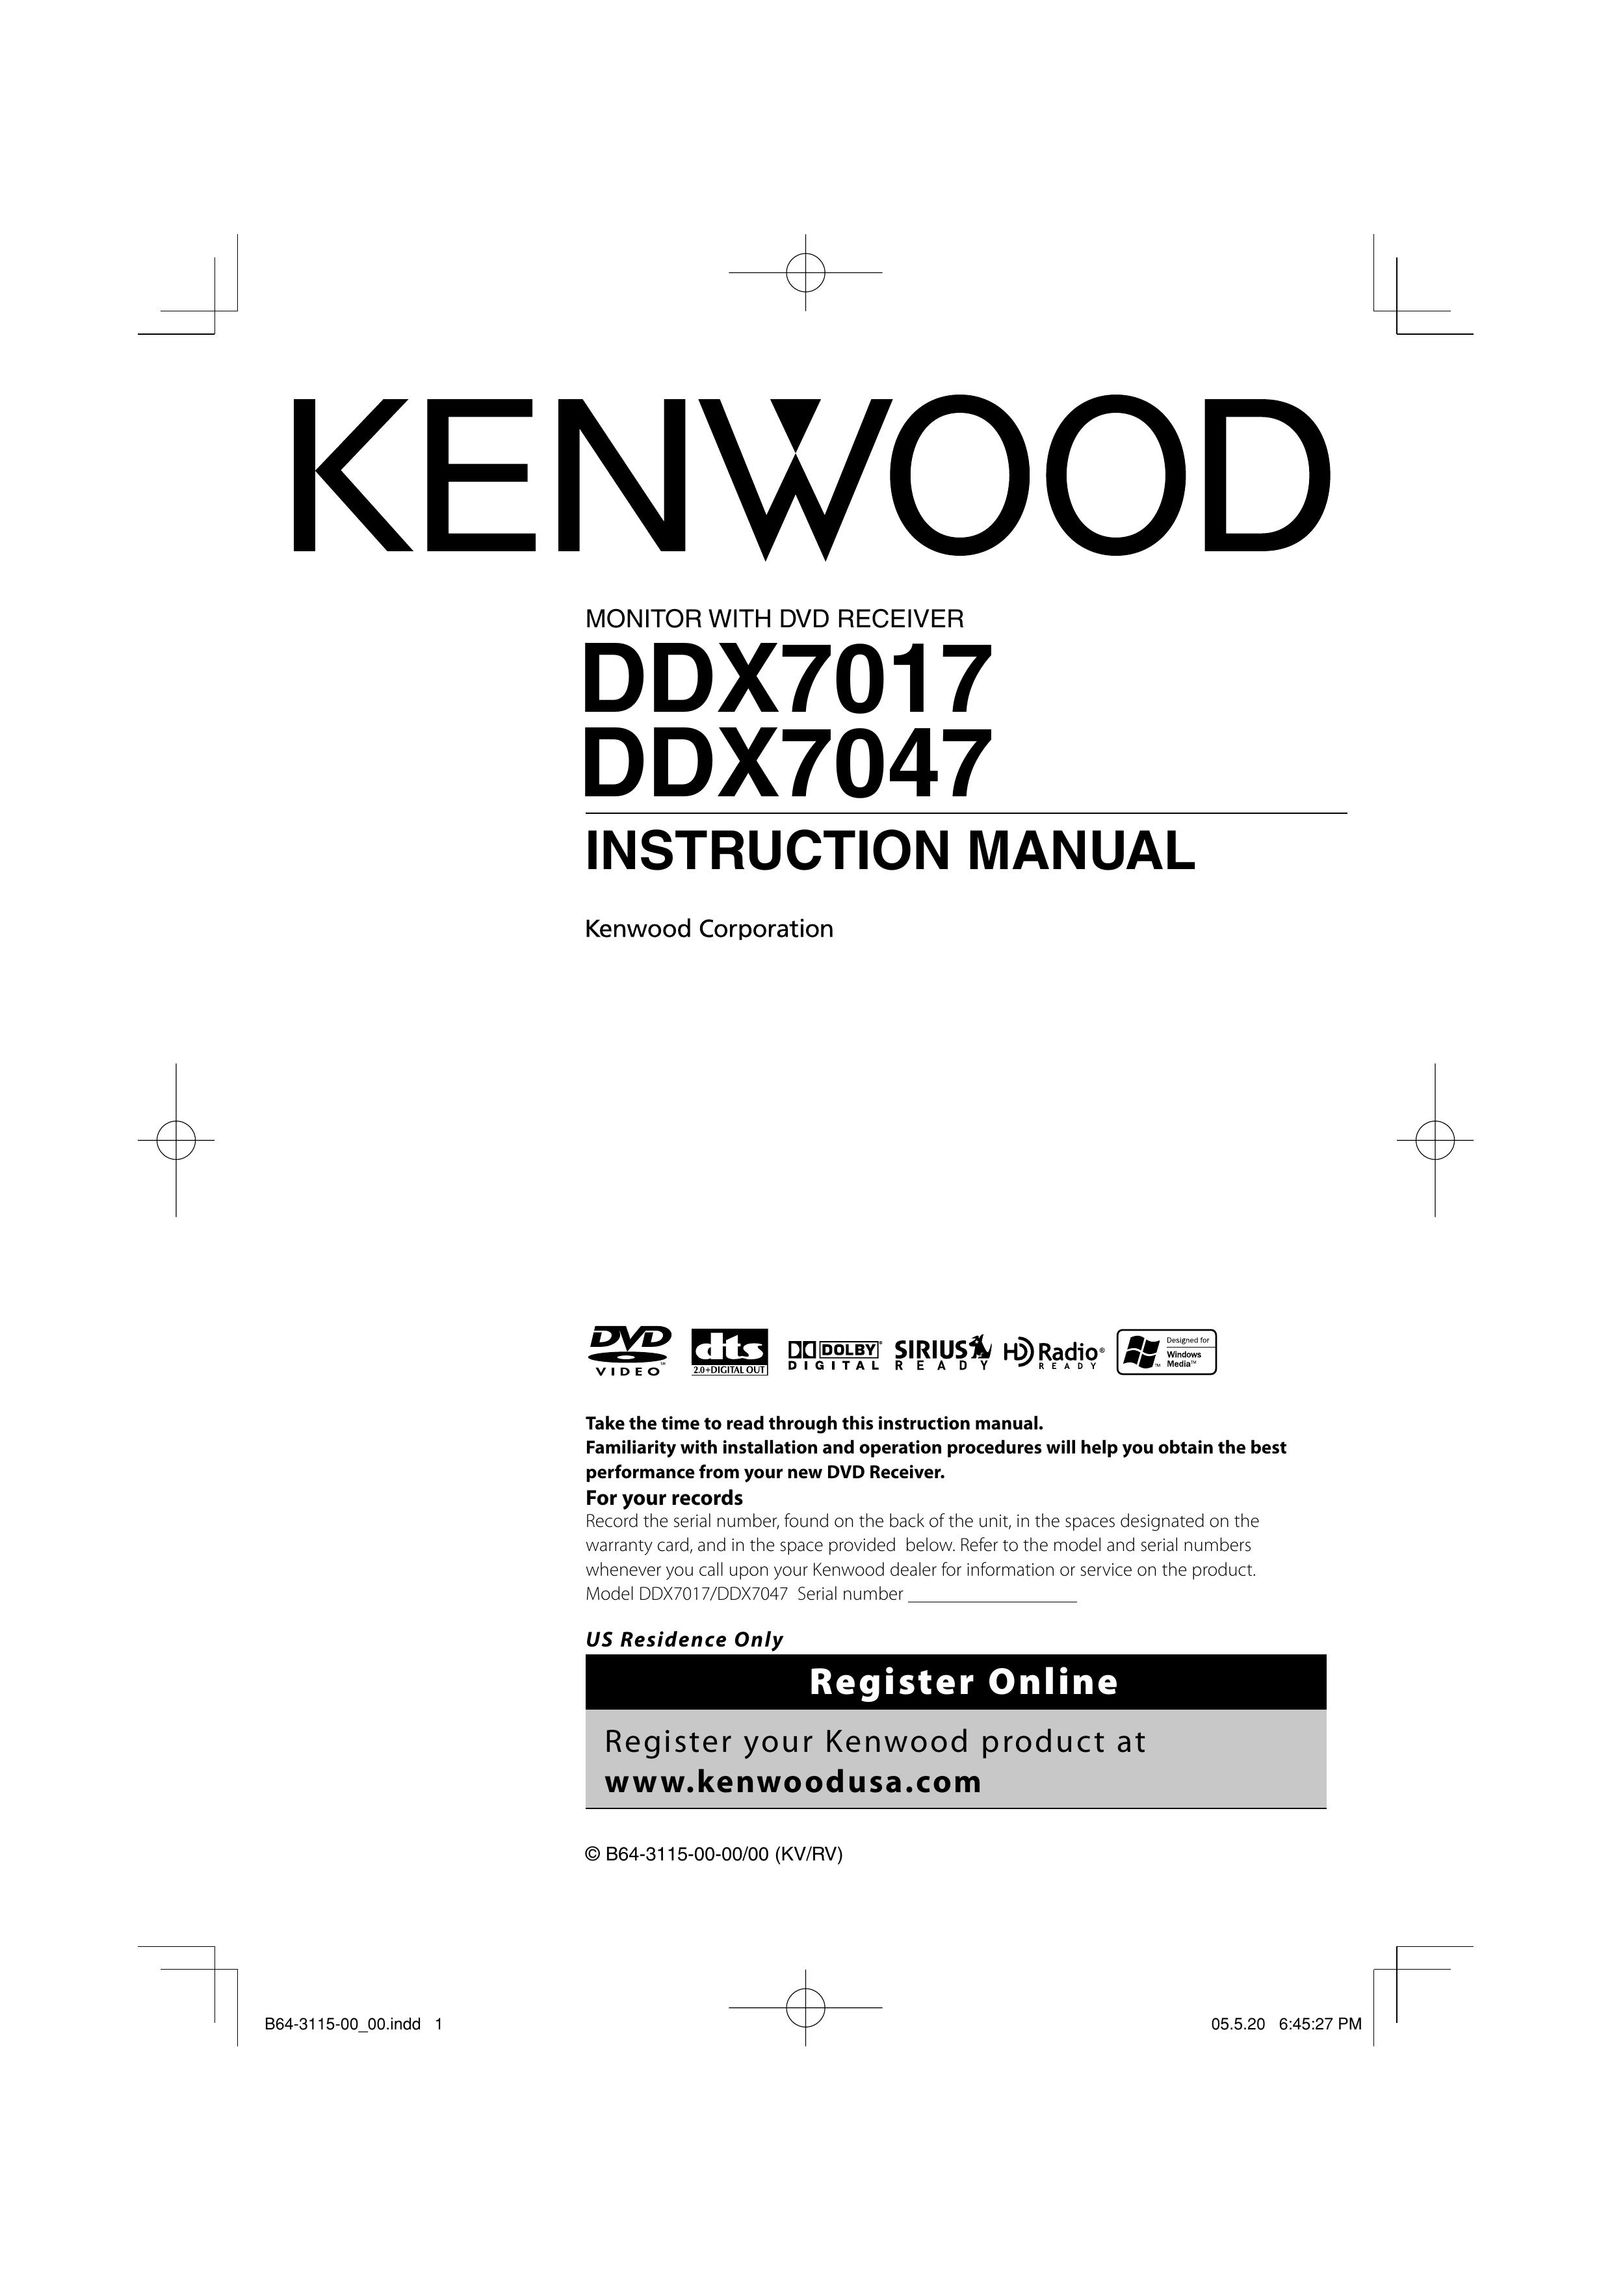 Kenwood DDX7017 DDX7047 Computer Monitor User Manual